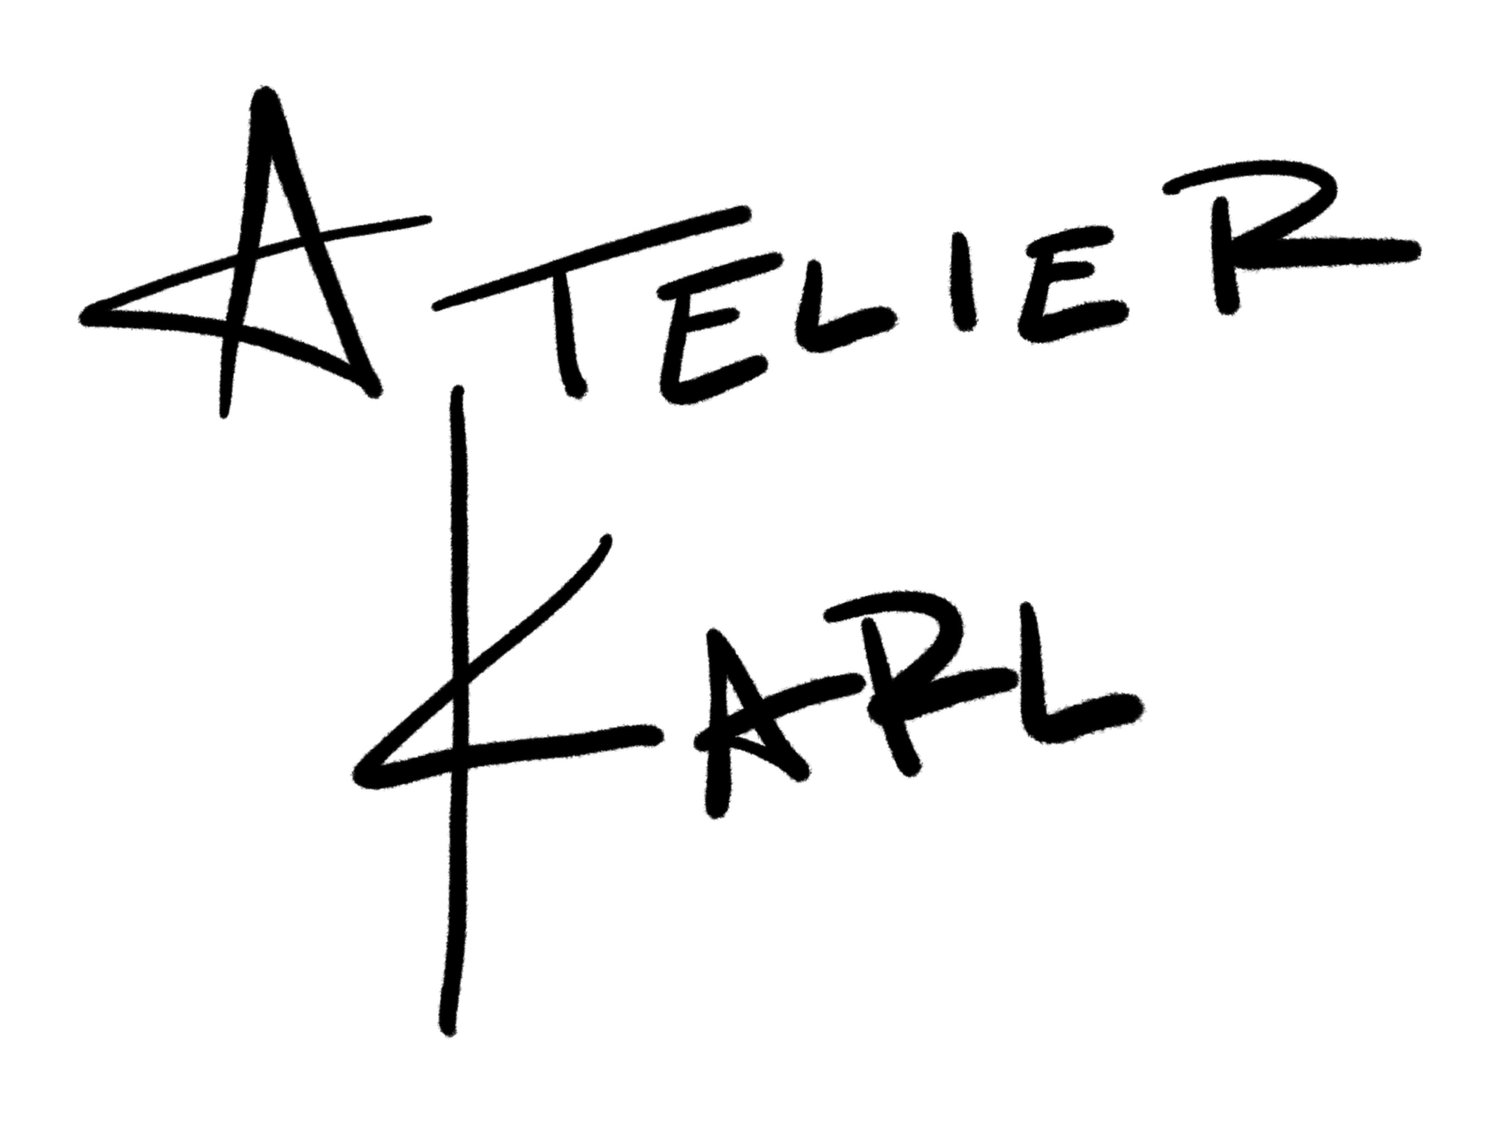 Atelier Karl